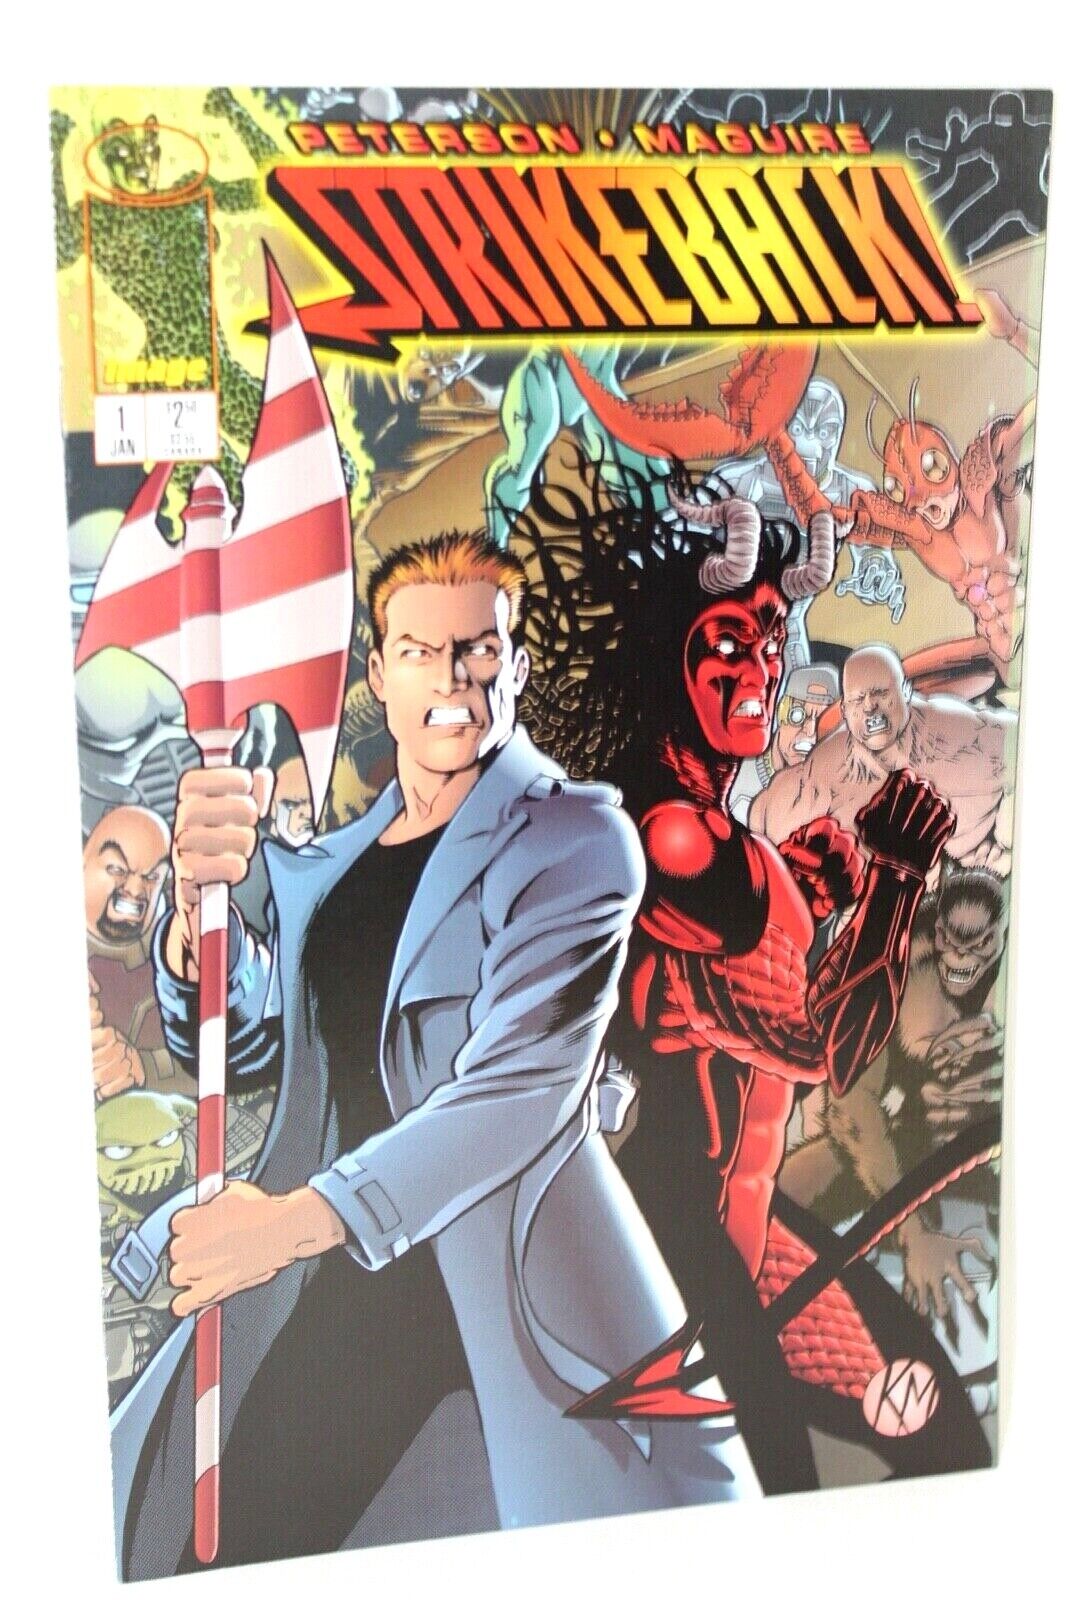 Strikeback #1 Jonathan Peterson Kevin Maguire 1996 Comic Image Comics F+/VF-